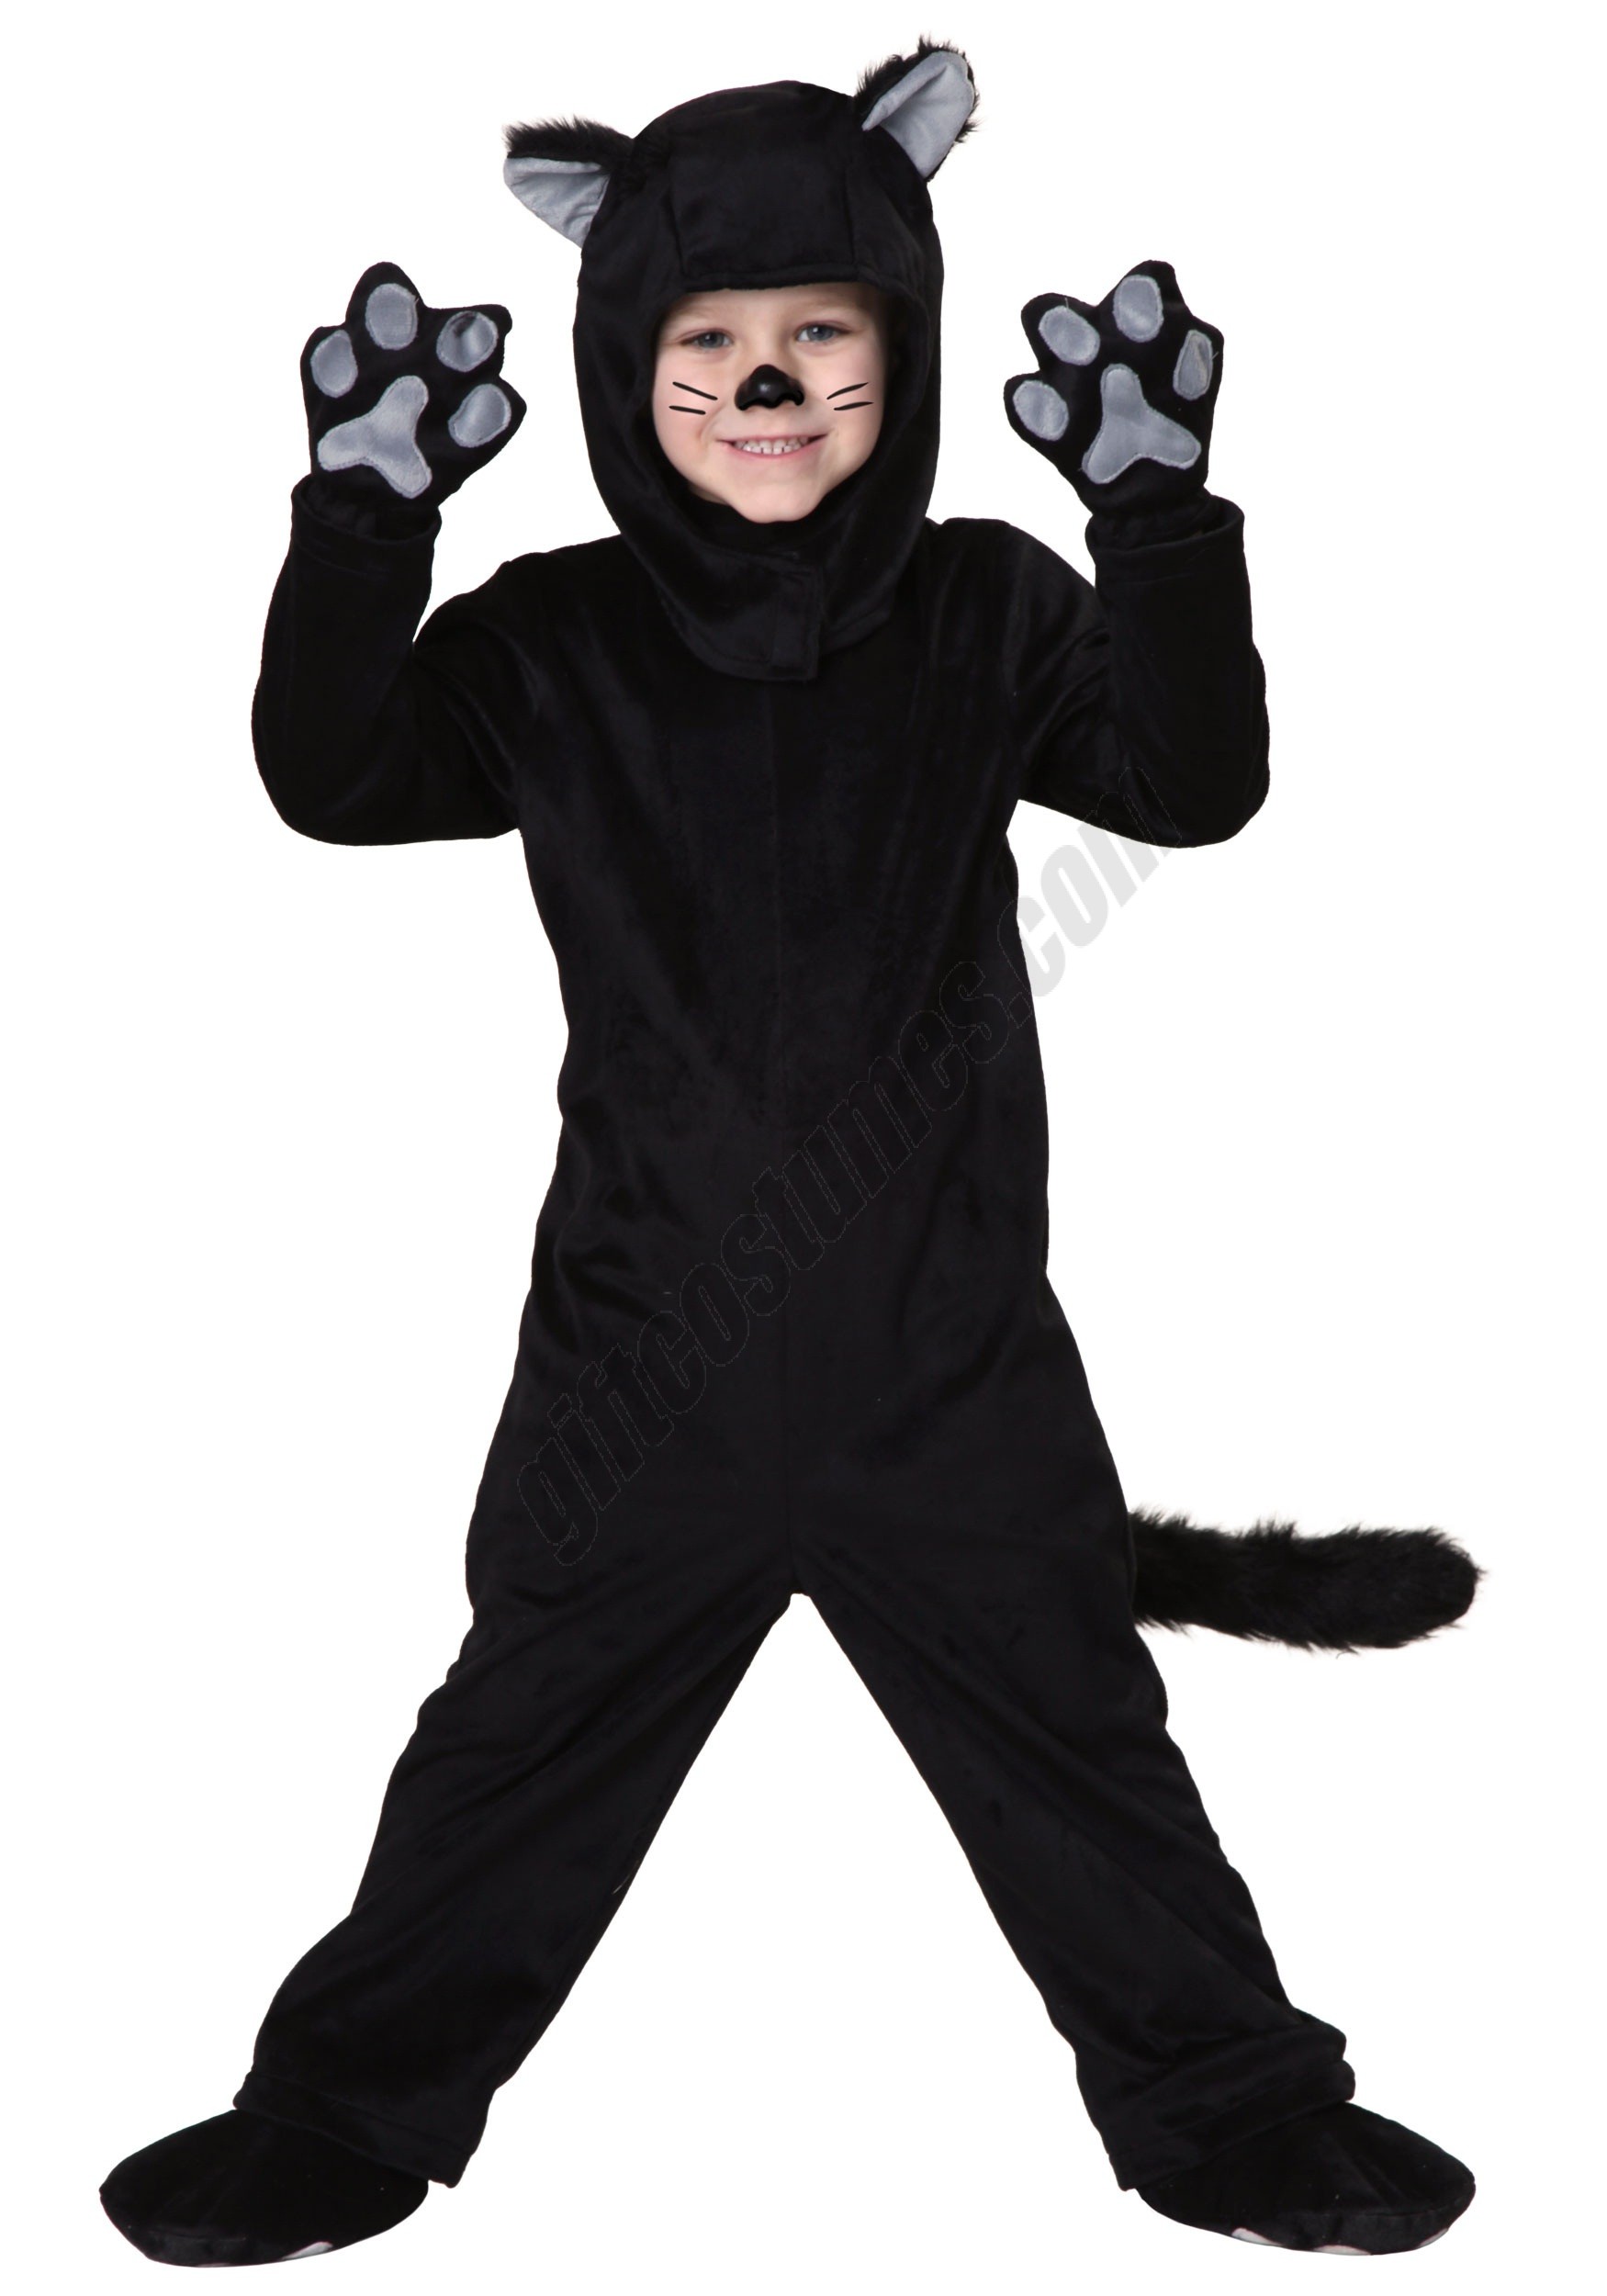 Toddler Little Black Cat Costume Promotions - Toddler Little Black Cat Costume Promotions